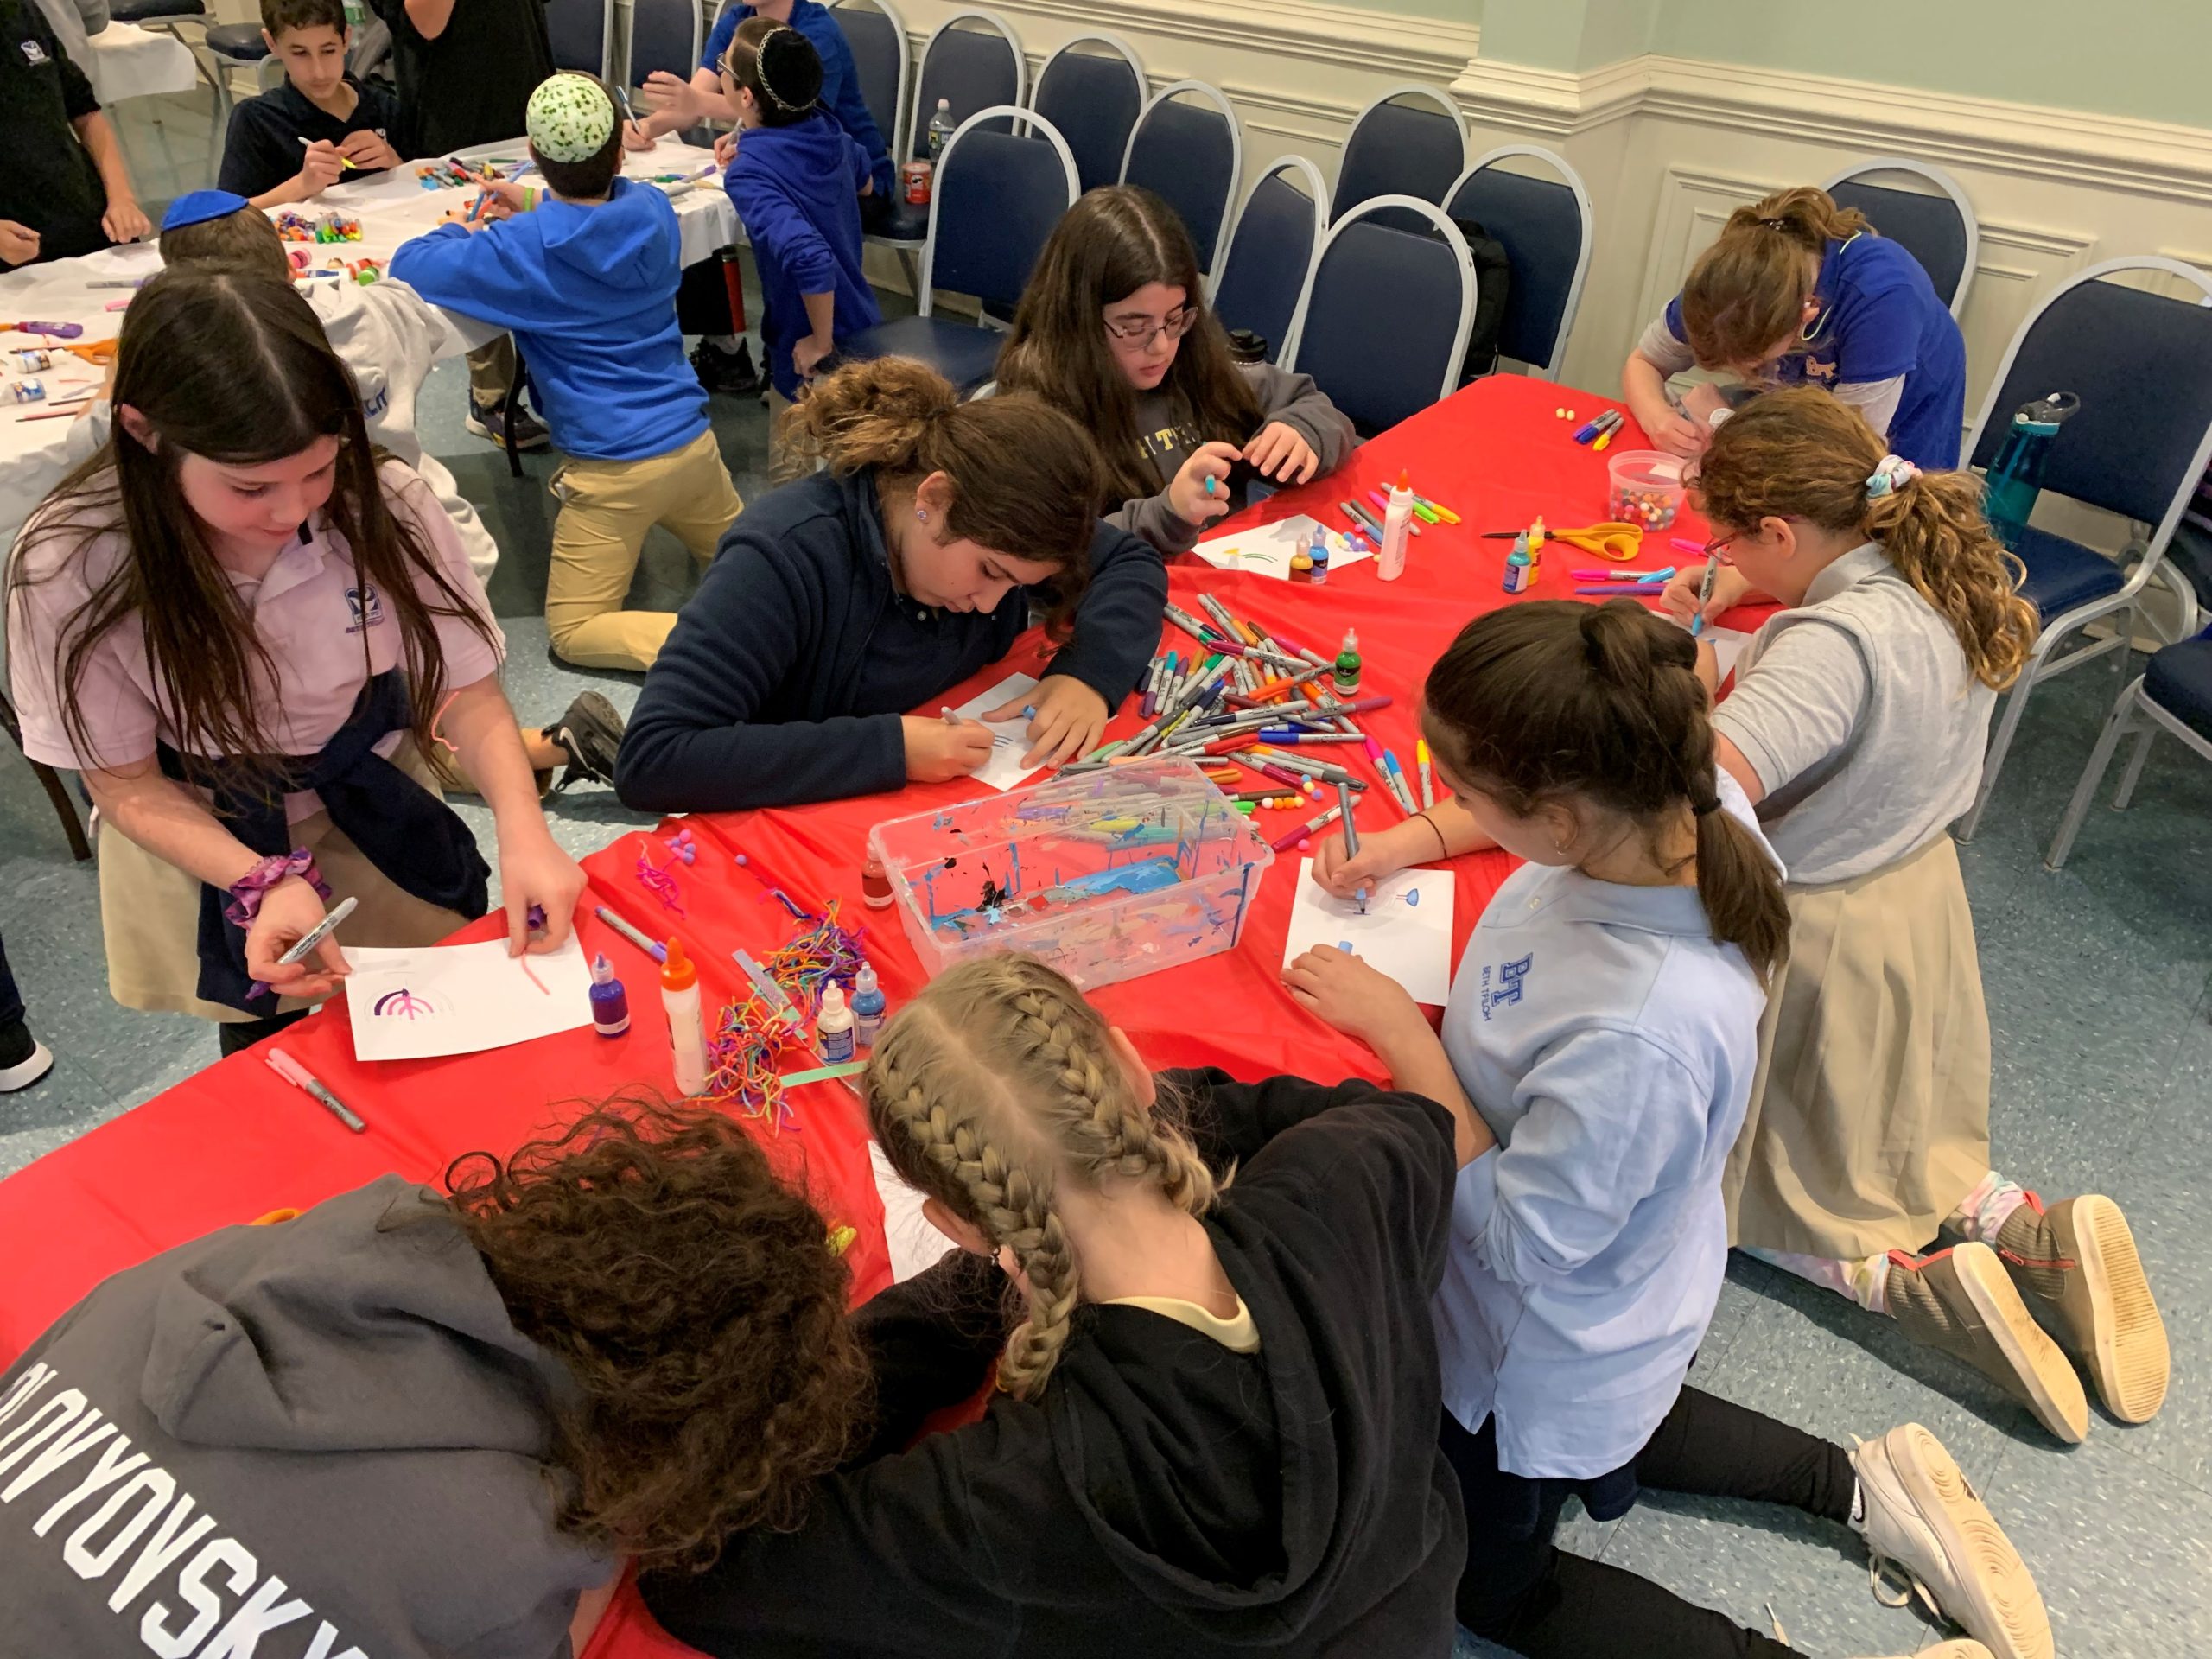 Children coloring at a table ילדים צובעים ליד שולחן